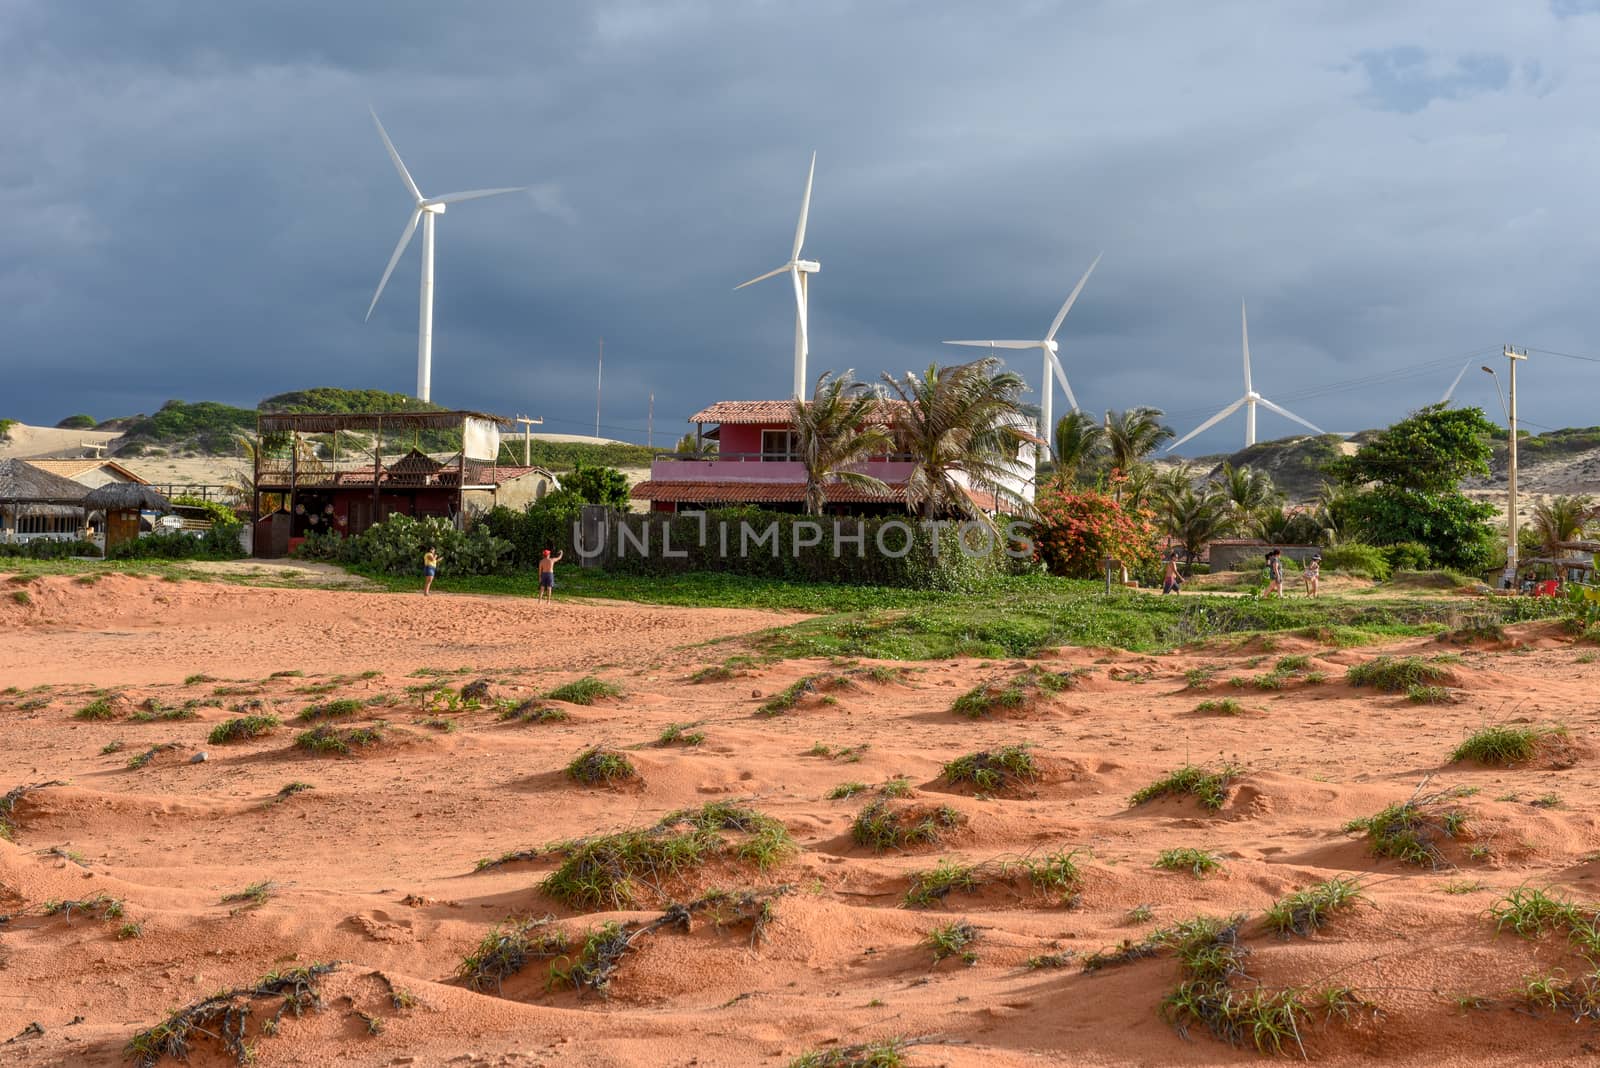 Wind farm at Canoa Quebrada on Brazil by Fotoember